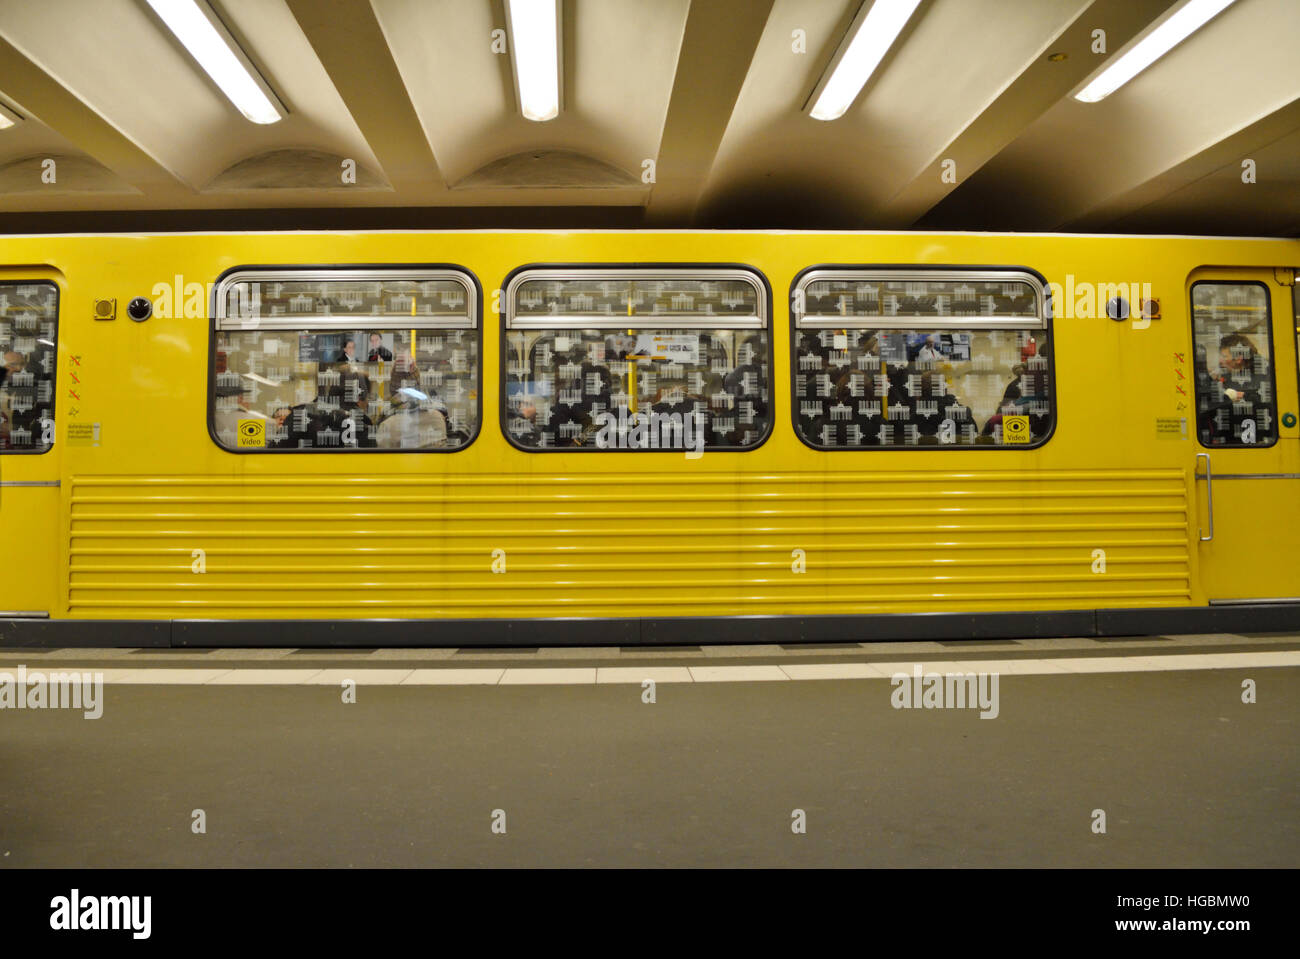 U-Bahn train at an underground train station in Berlin, Germany Stock Photo